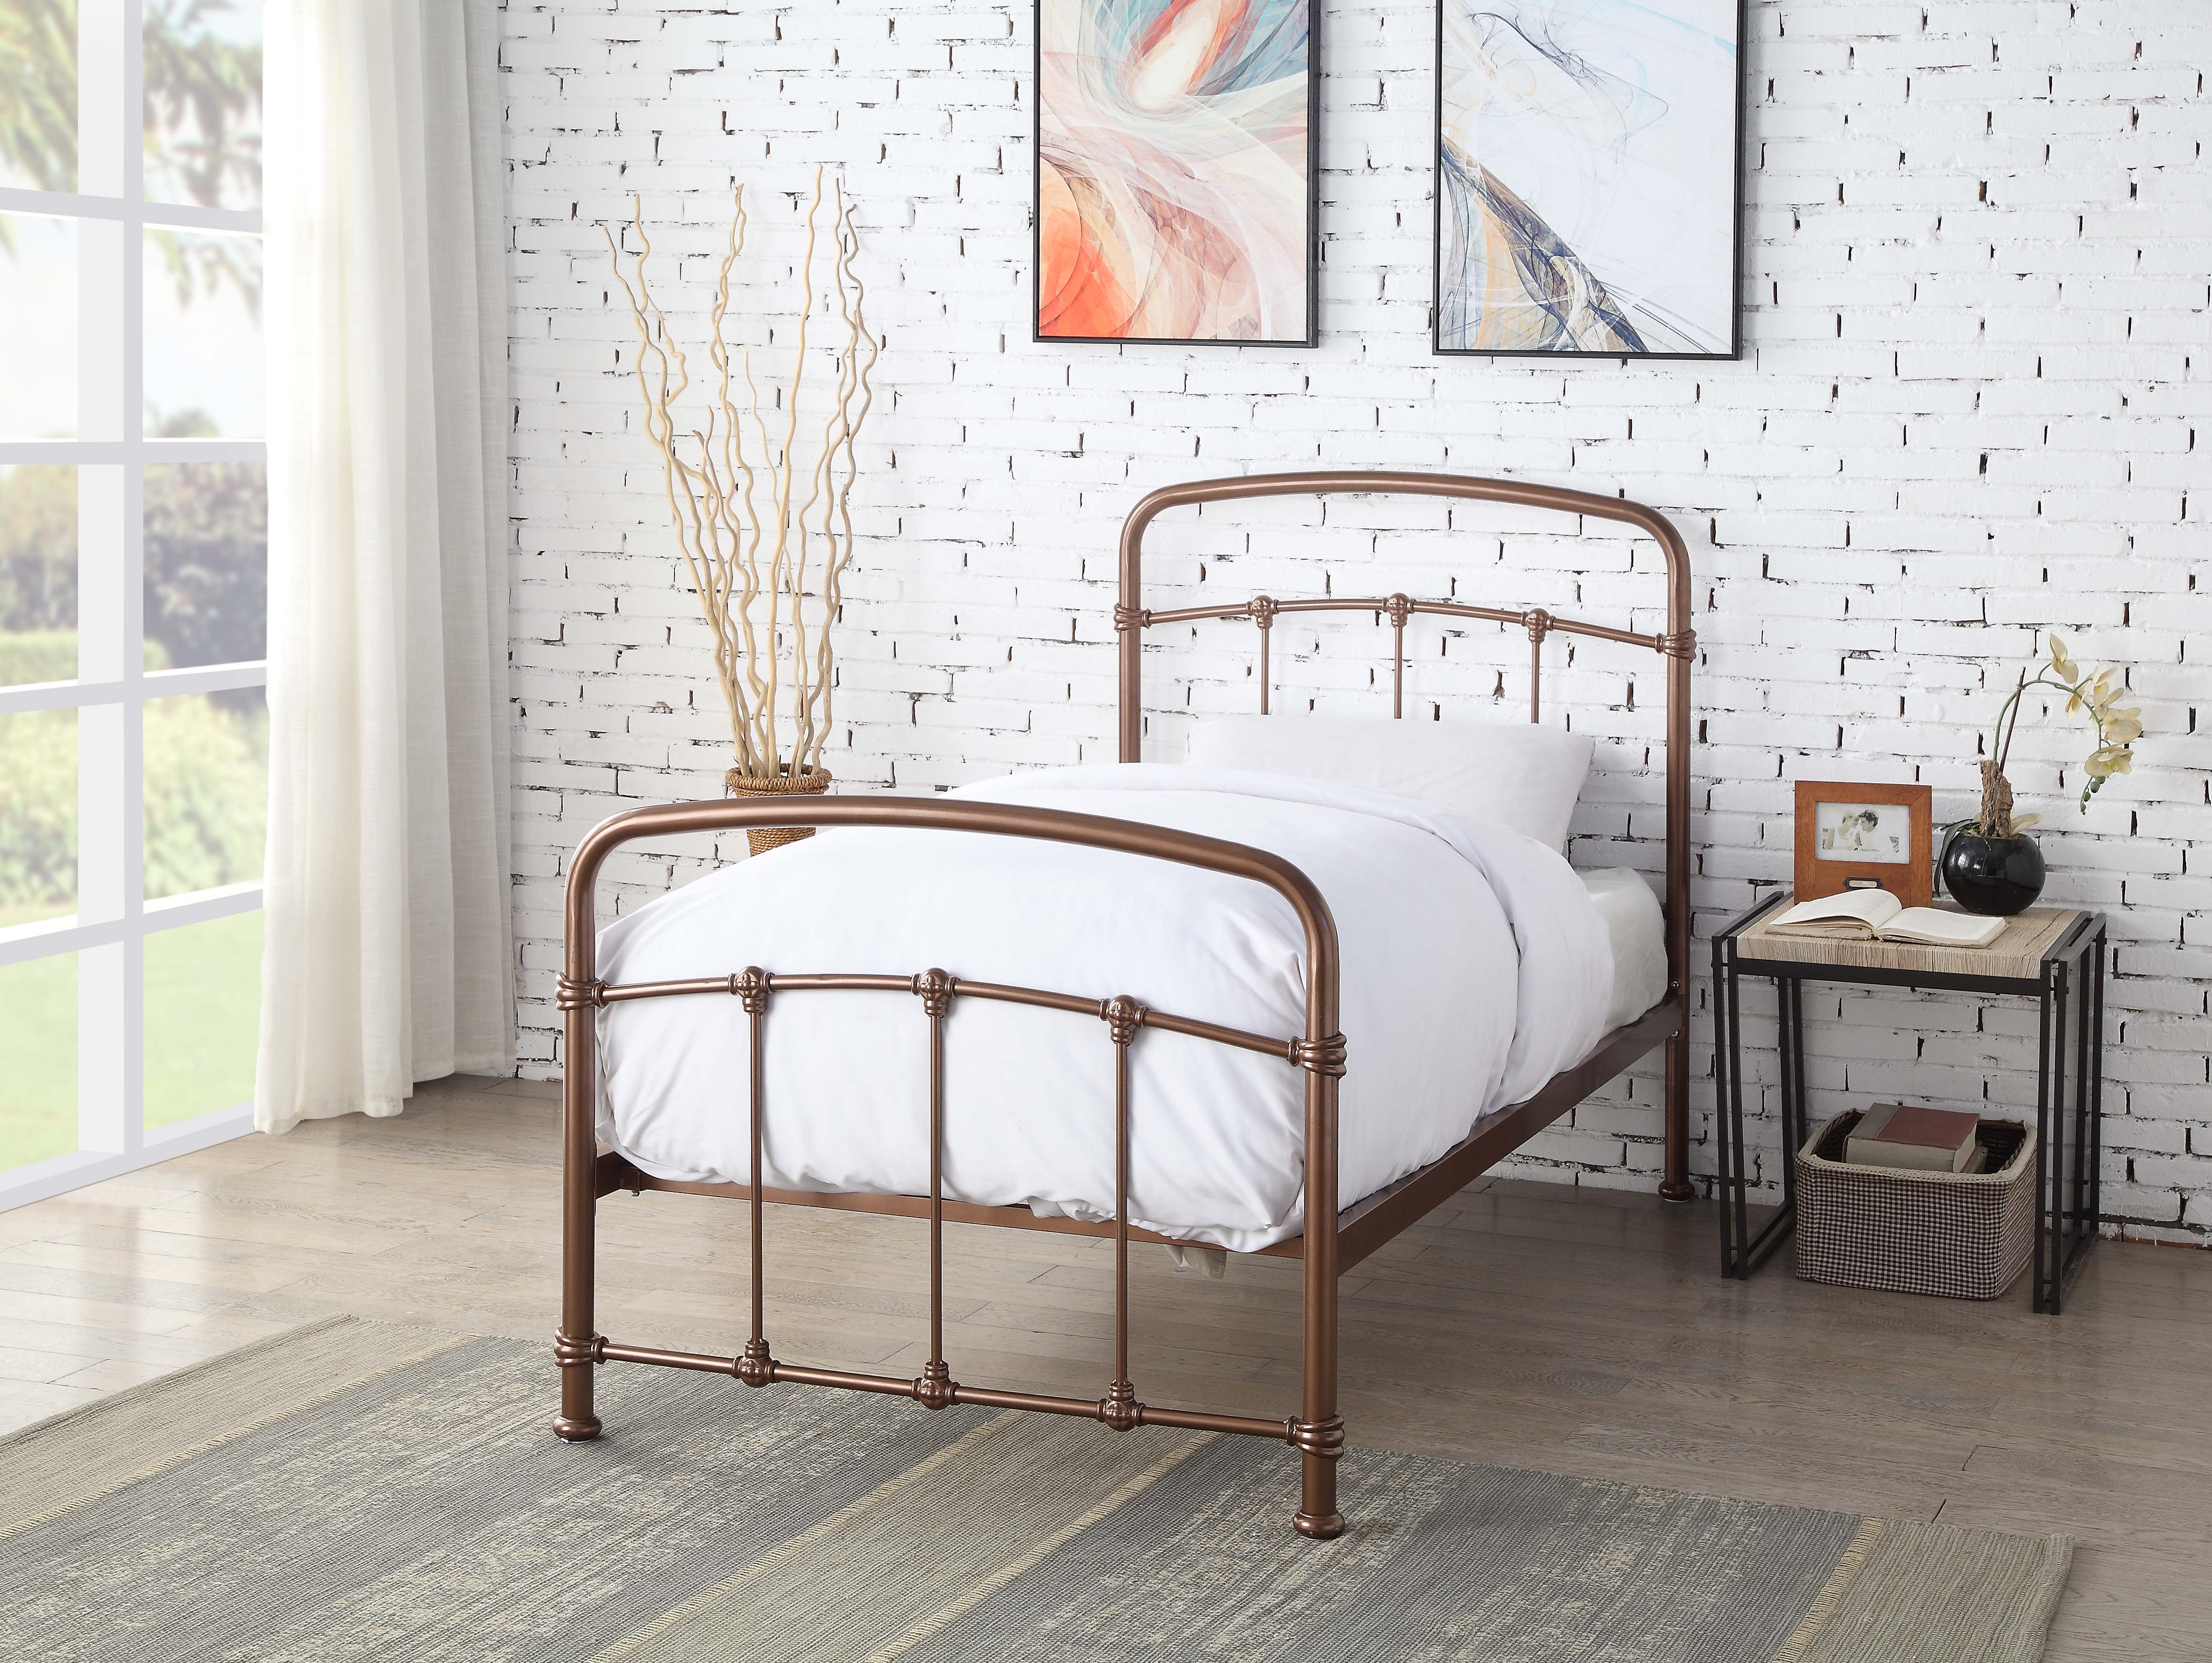 3ft Single Retro Bed Frame Rose Gold, Rustic Industrial King Size Bed Frame